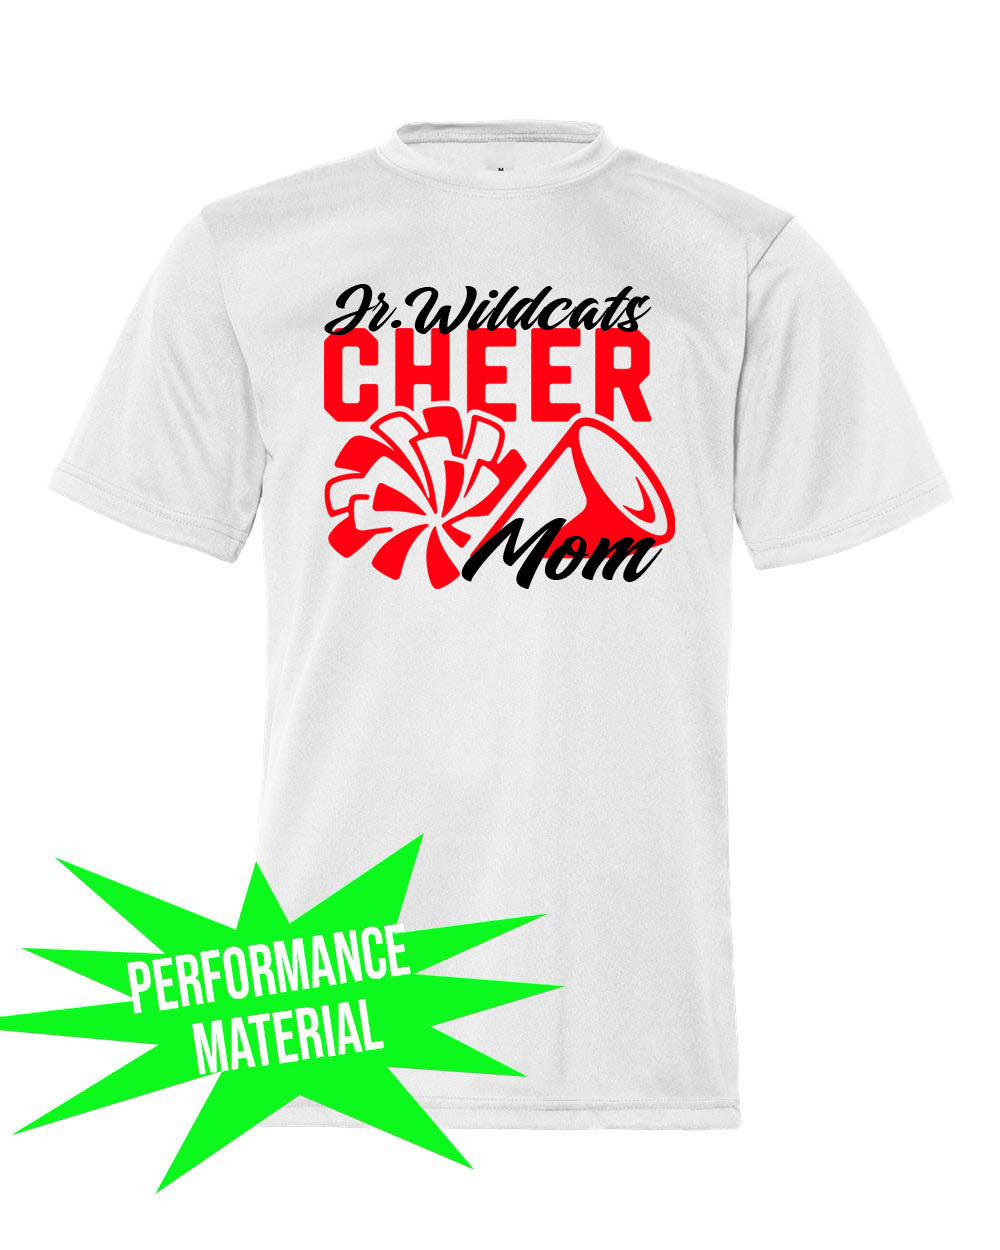 High Point Cheer Performance Material design 4 T-Shirt